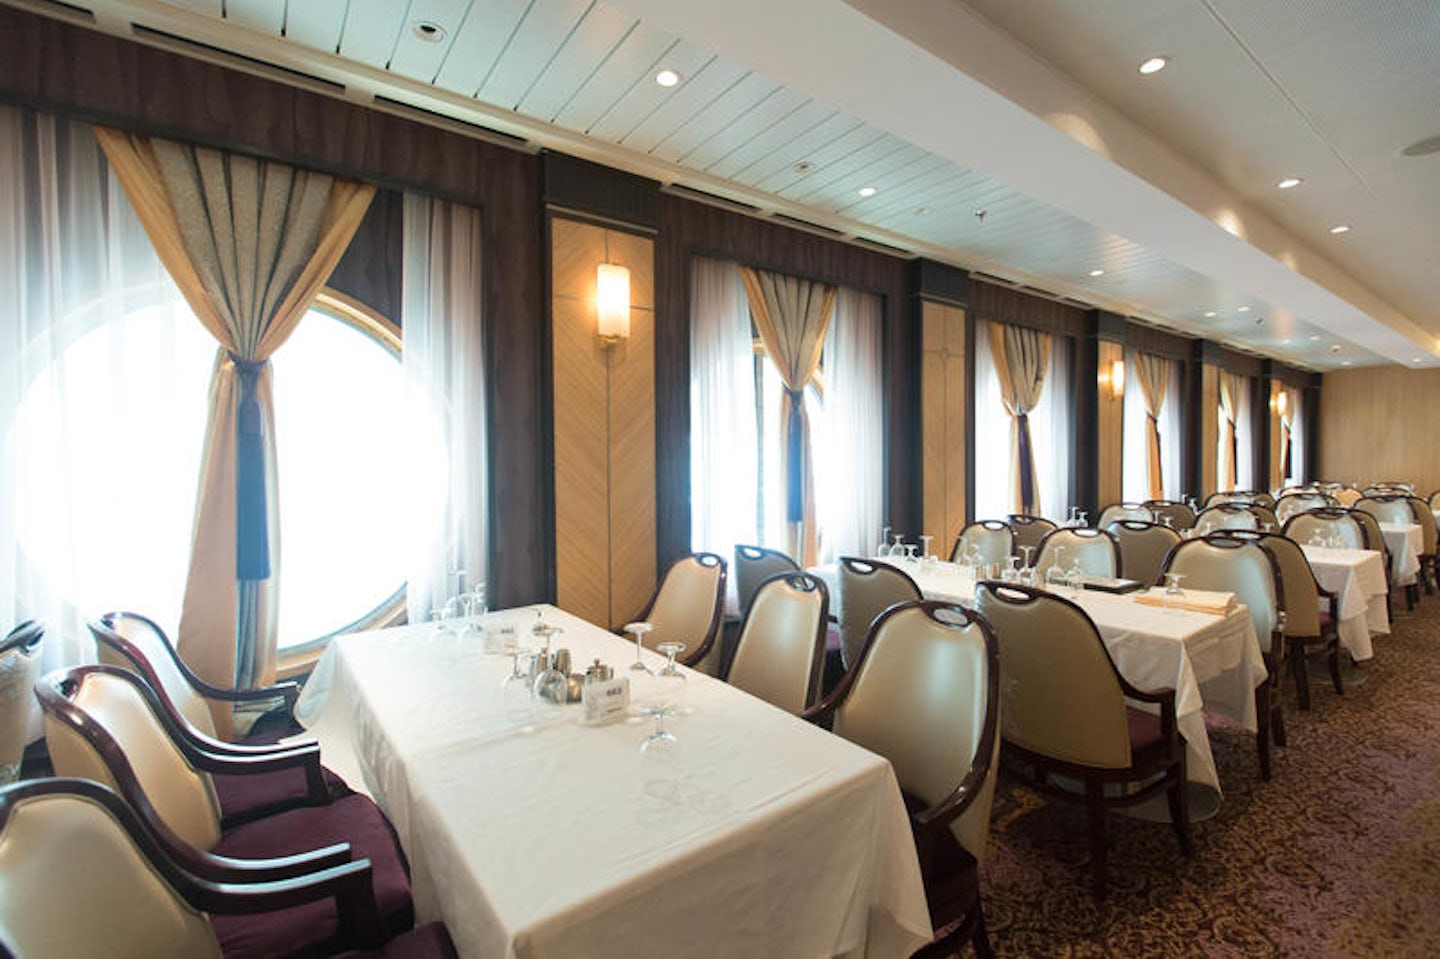 The Grande Restaurant on Allure of the Seas